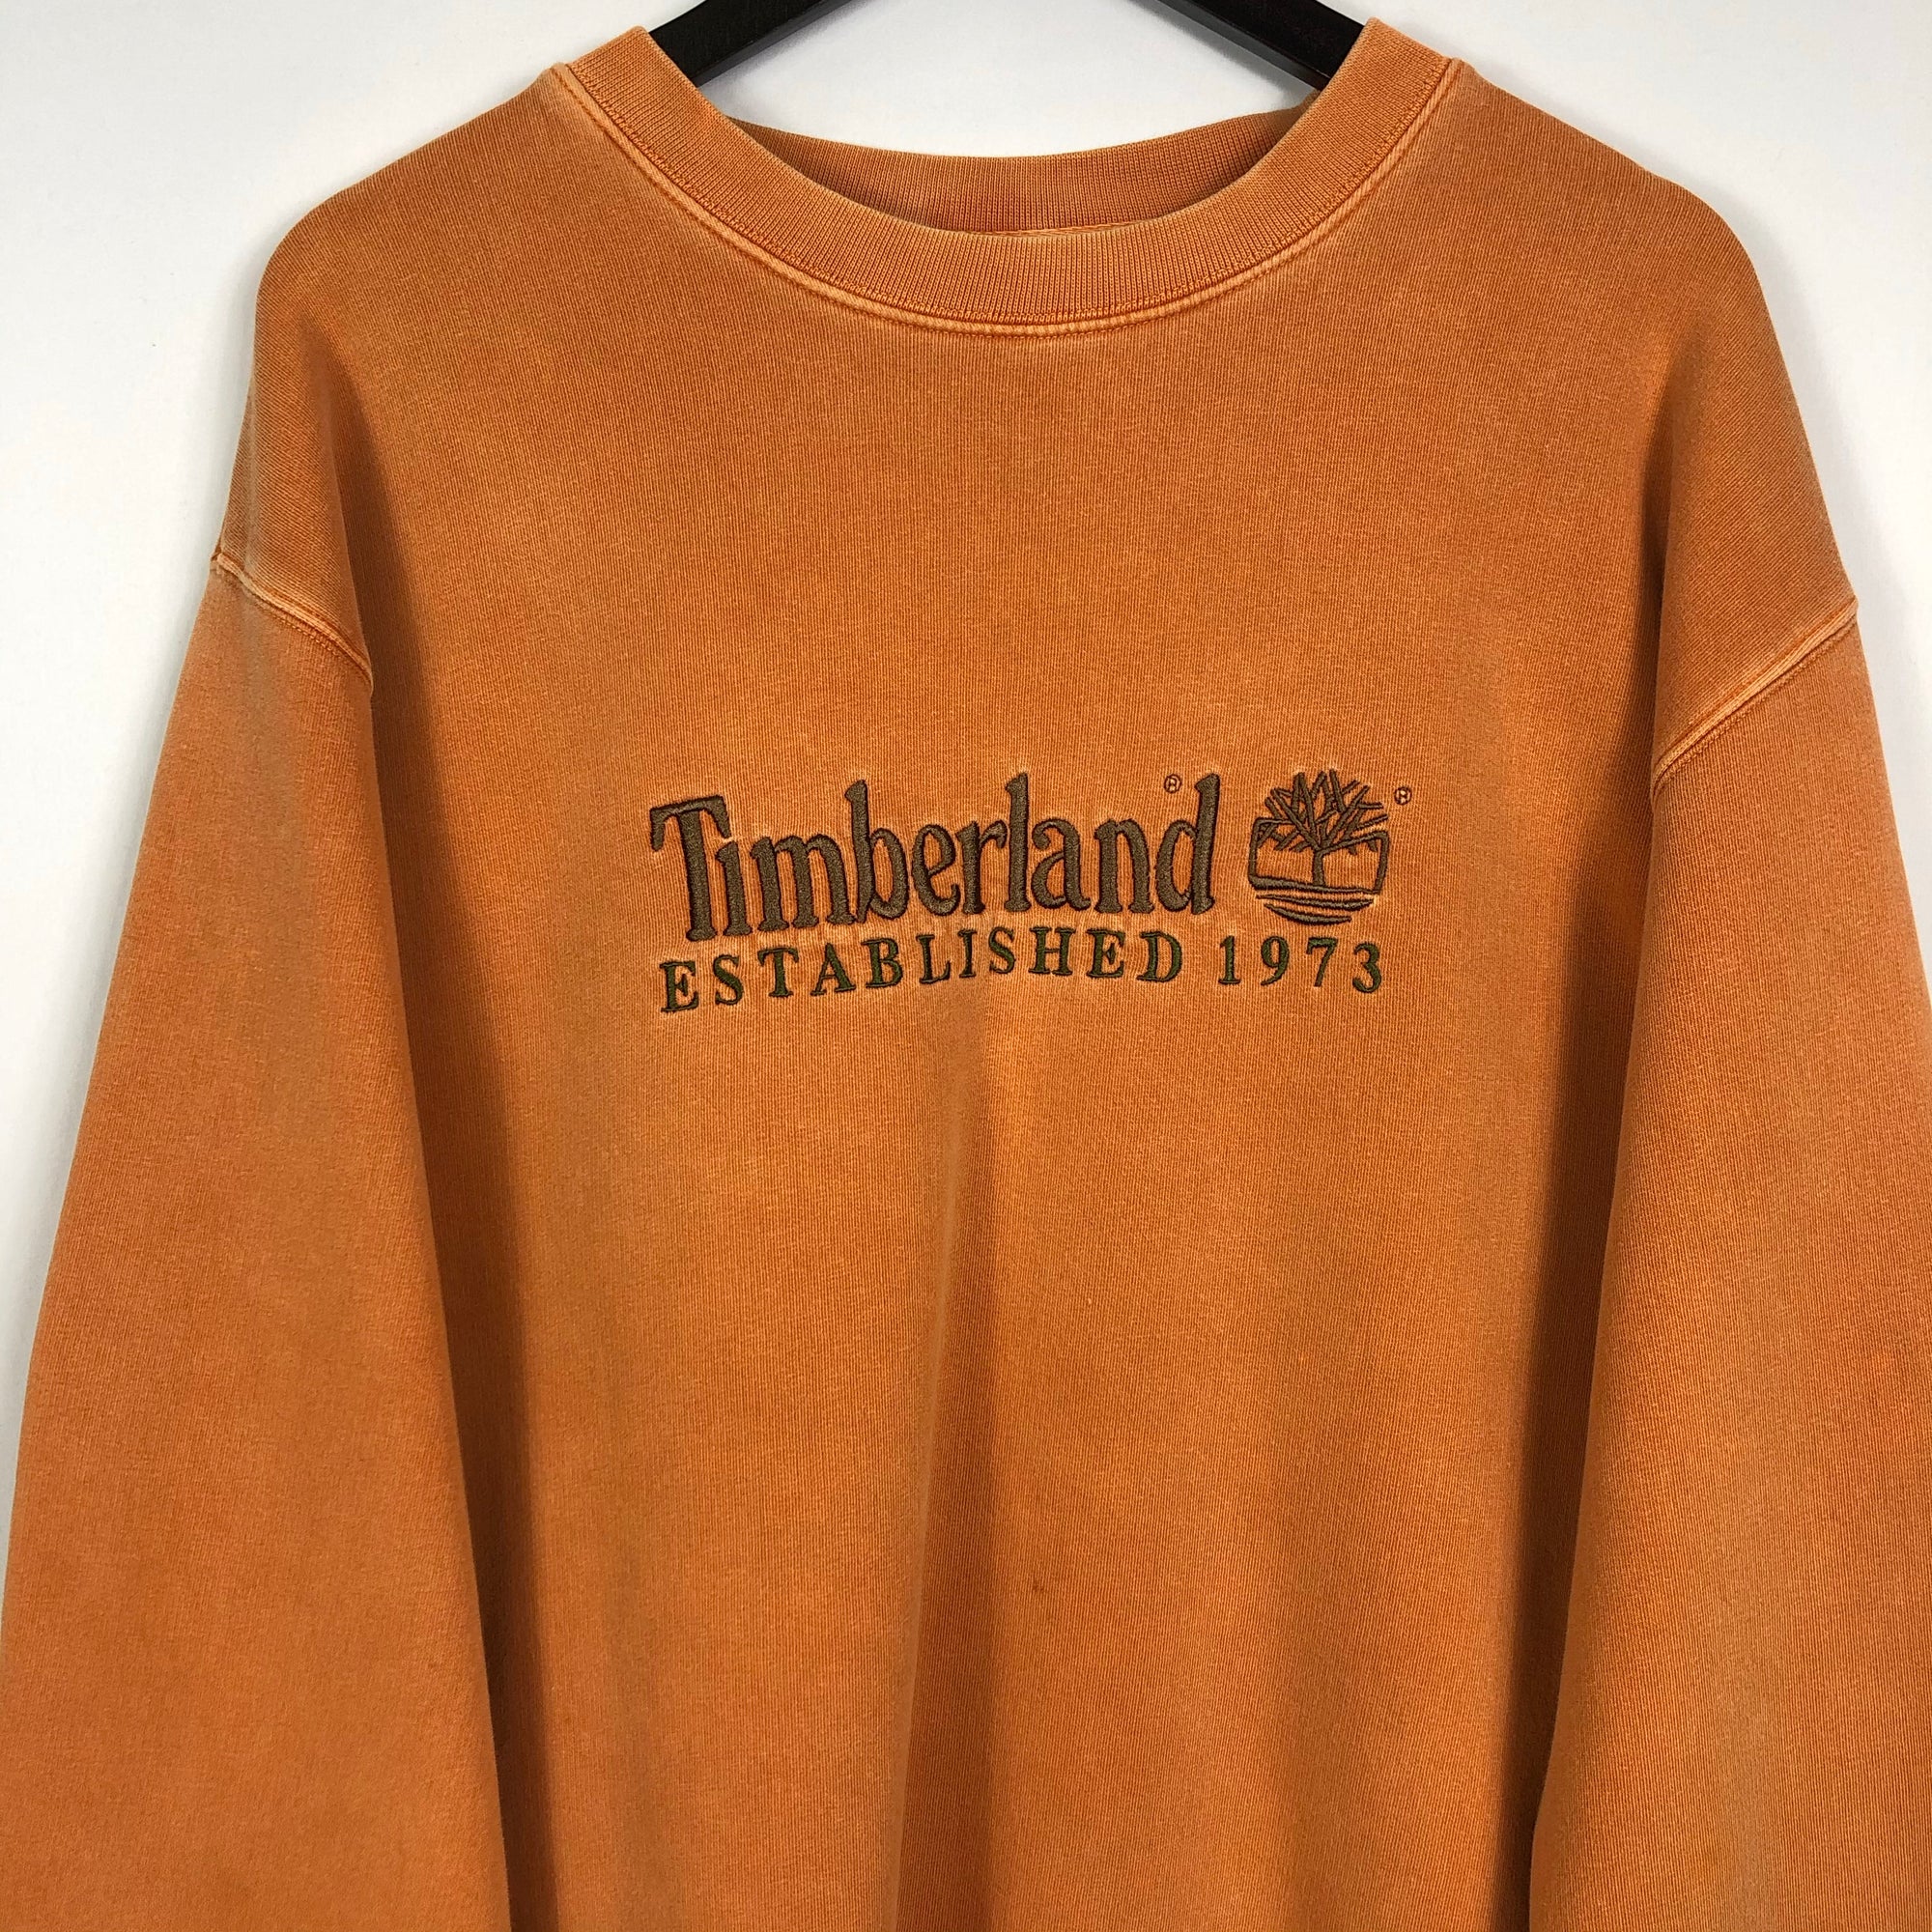 Vintage Timberland Sweatshirt in Orange - Men’s XL/Women’s XXL